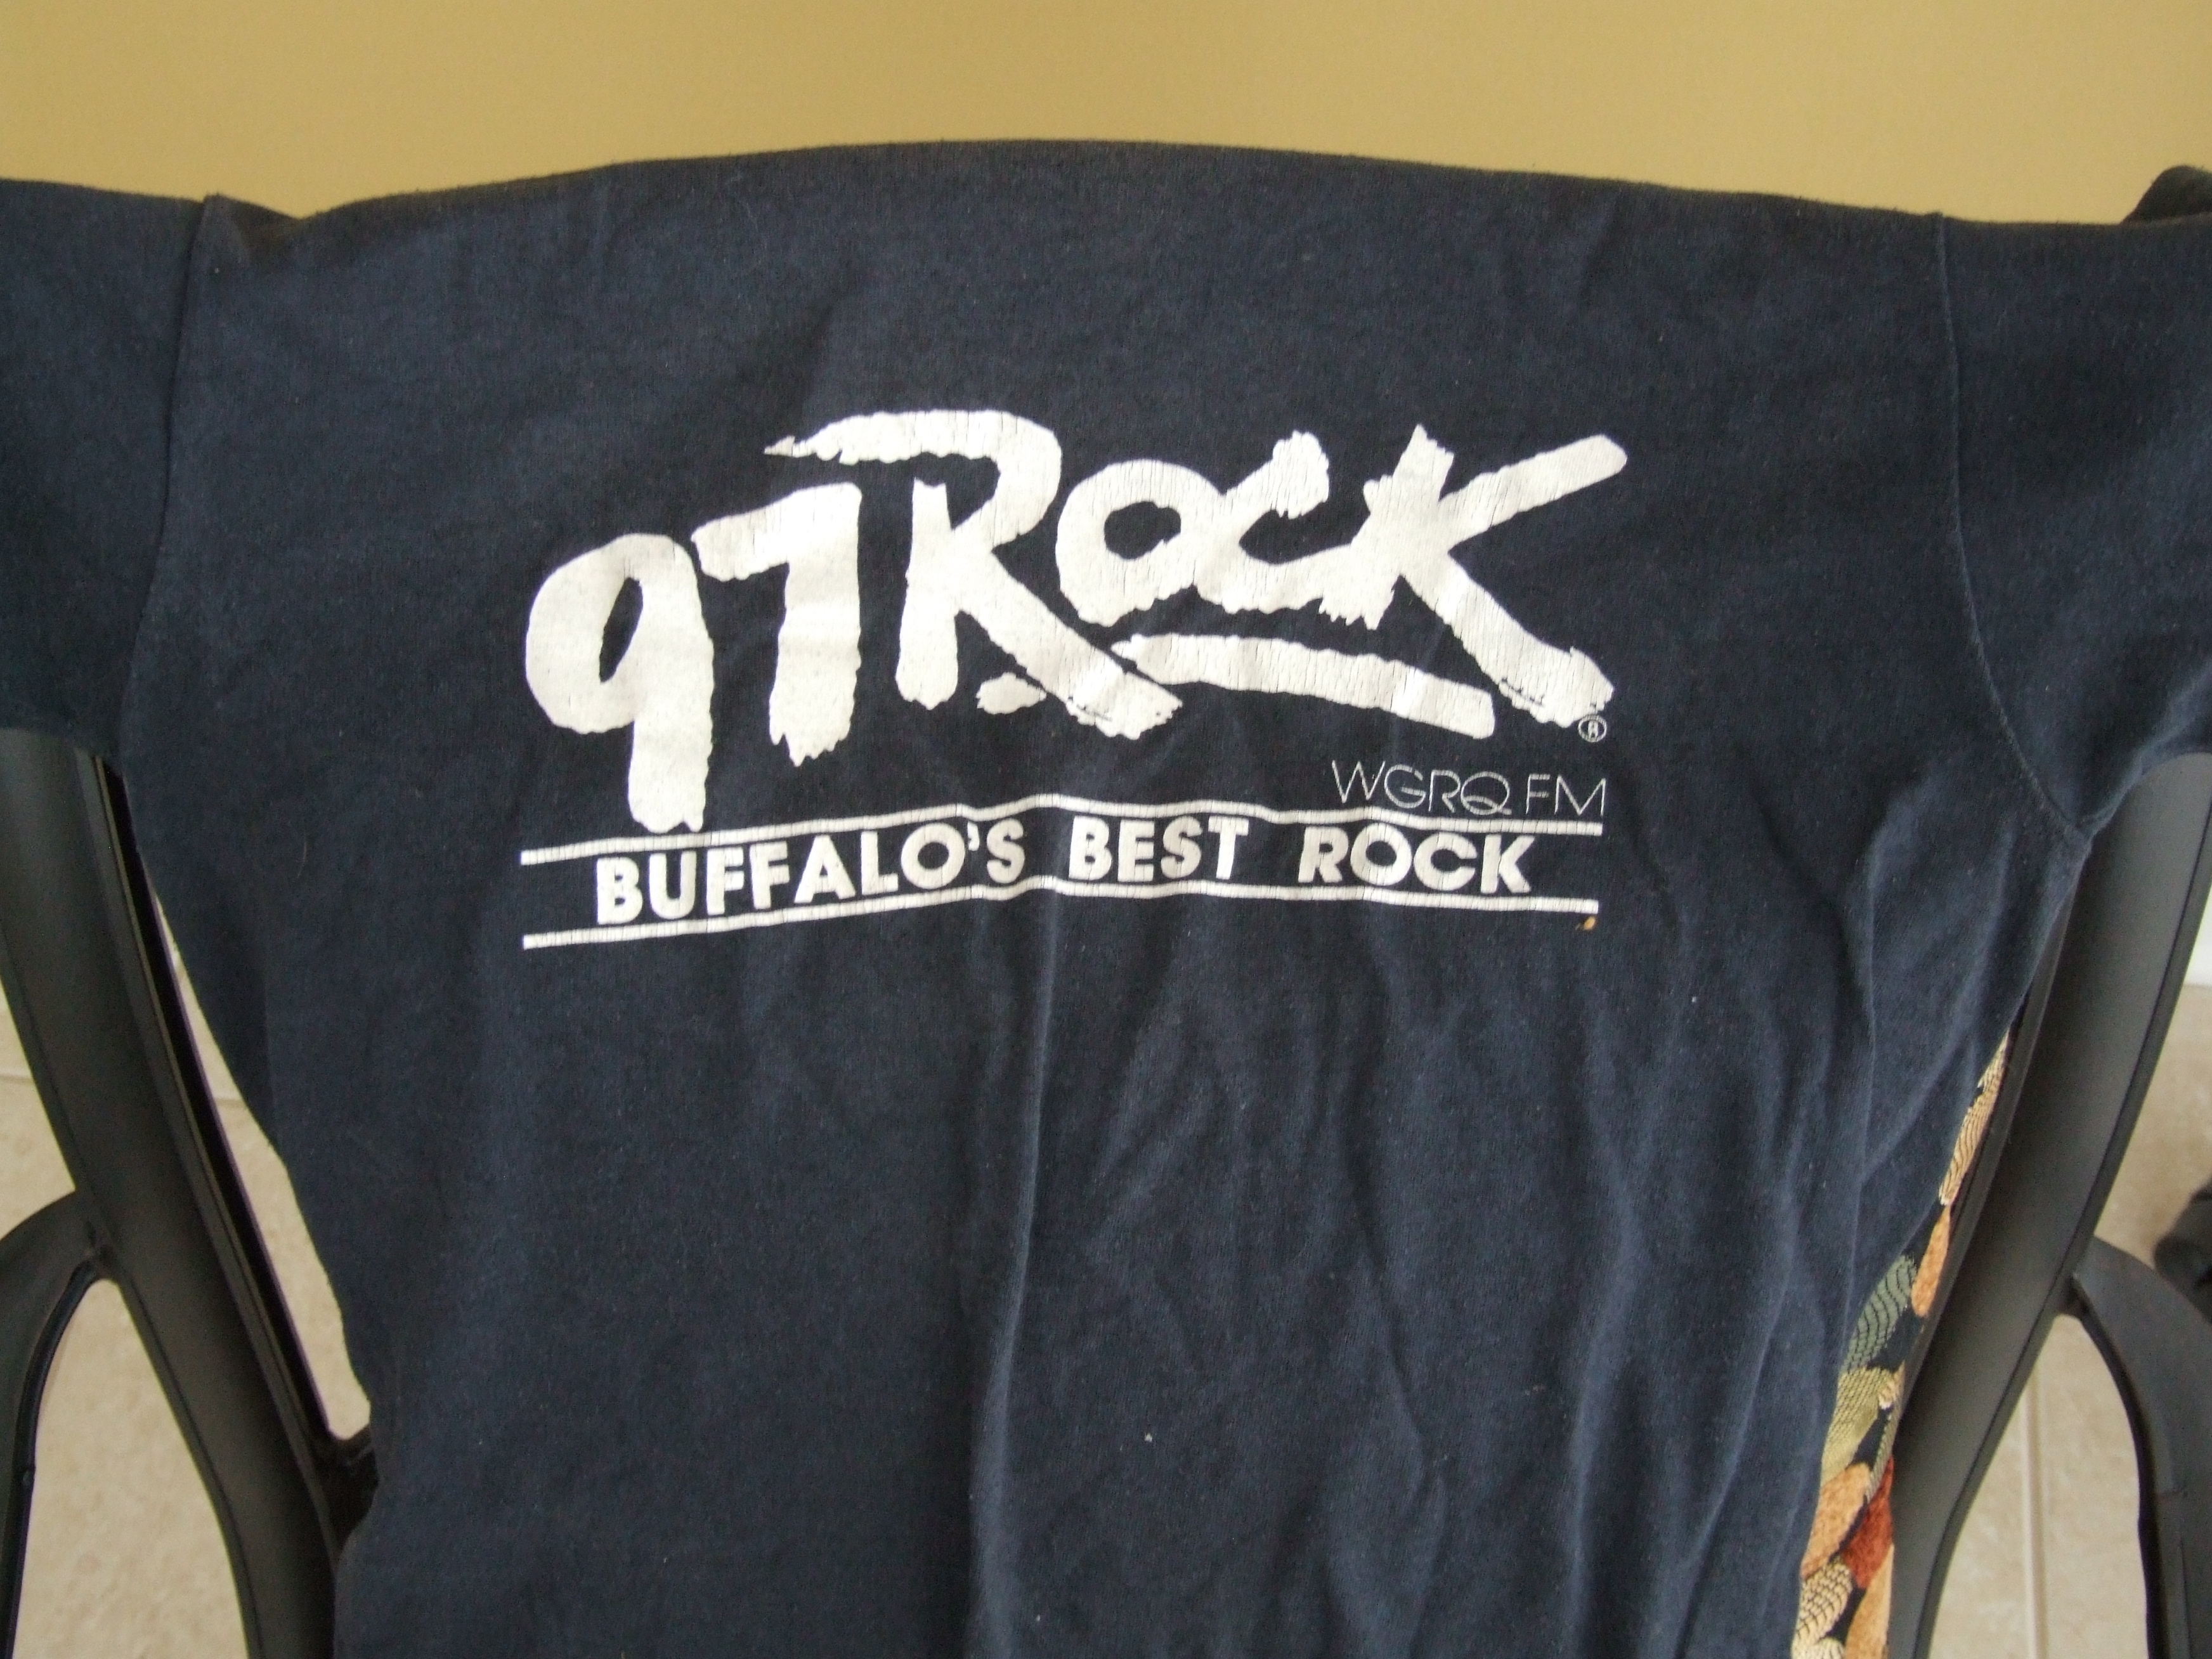 Vintage 97 Rock T shirts